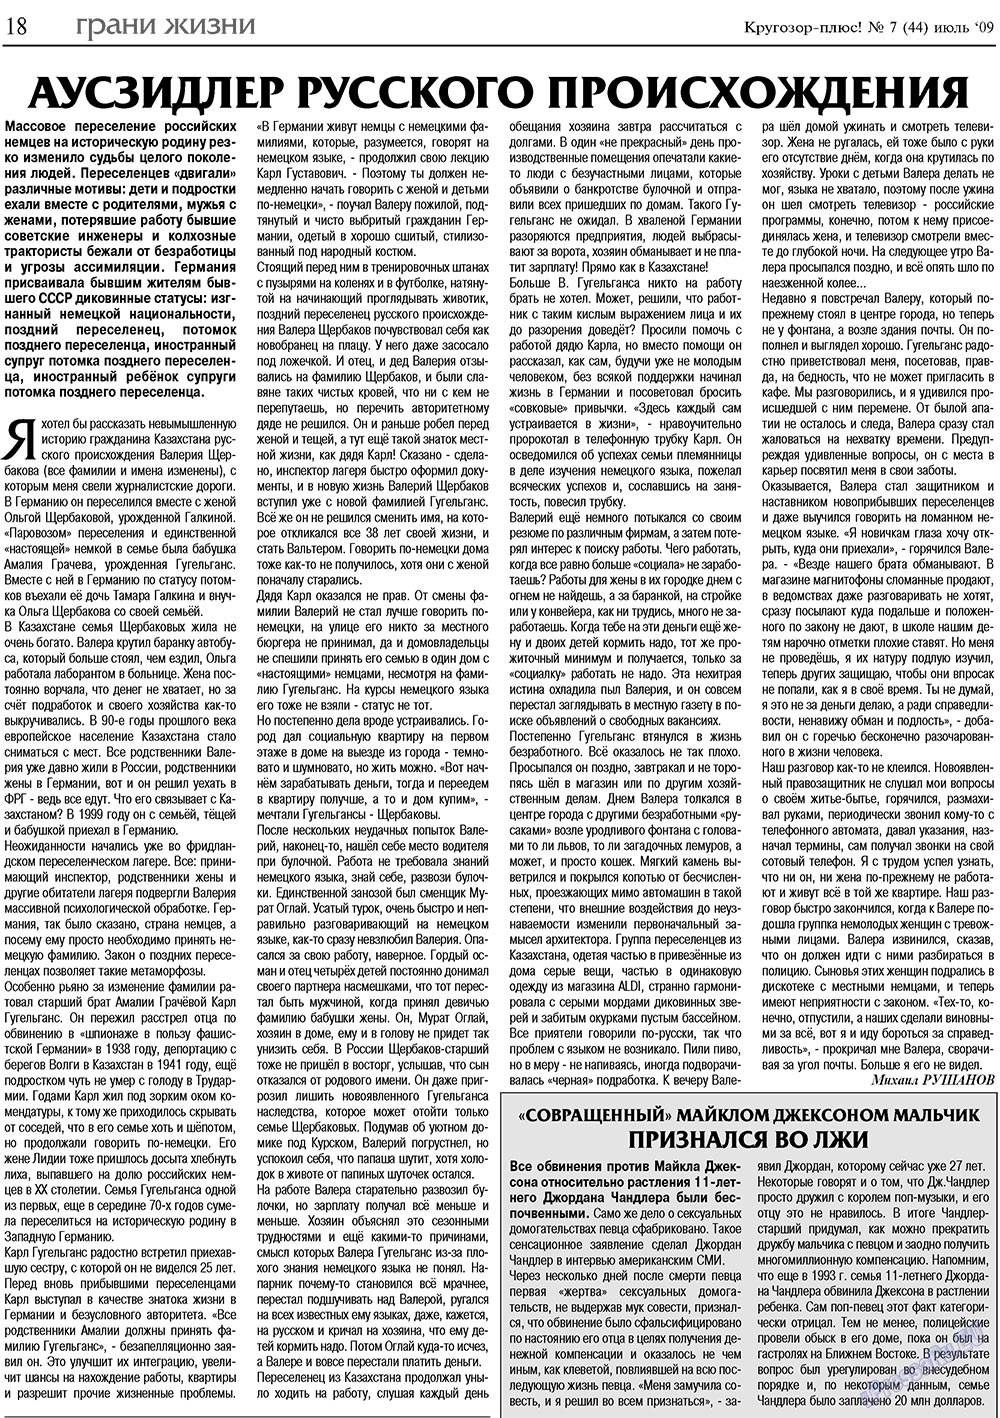 Кругозор плюс! (газета). 2009 год, номер 7, стр. 18